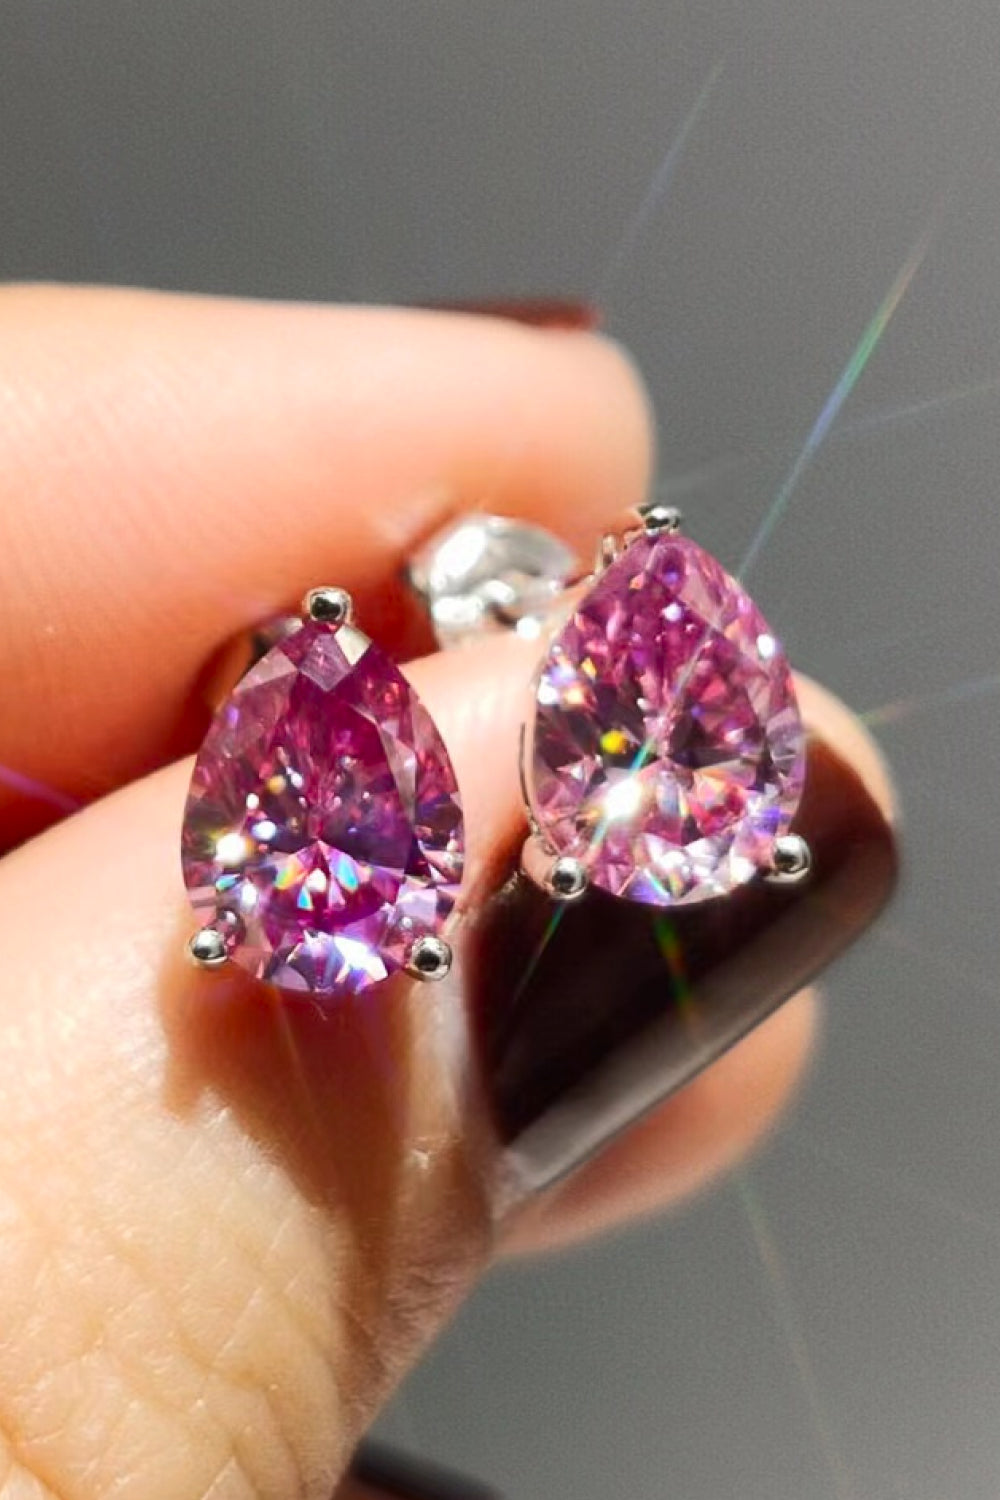 Pink Pear Shape Earrings 2 Carat Teardrop Moissanite Platinum-Plated Stud Earrings